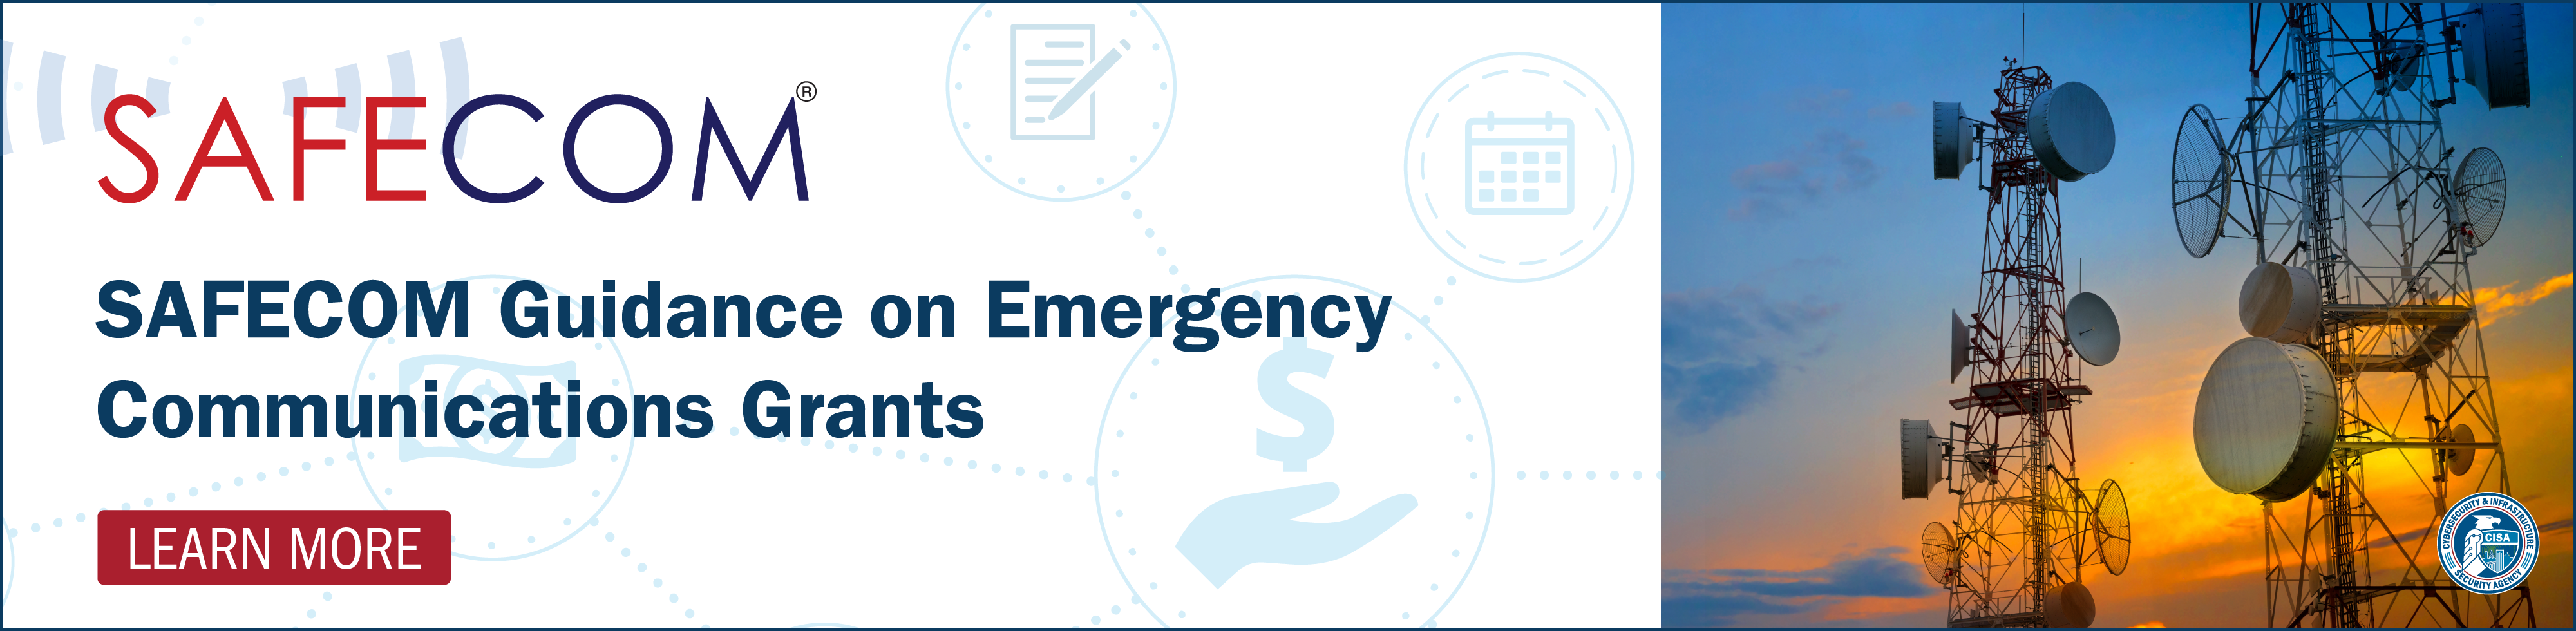 SAFECOM. SAFECOM Guidance on Emergency Communications Grants. Learn More